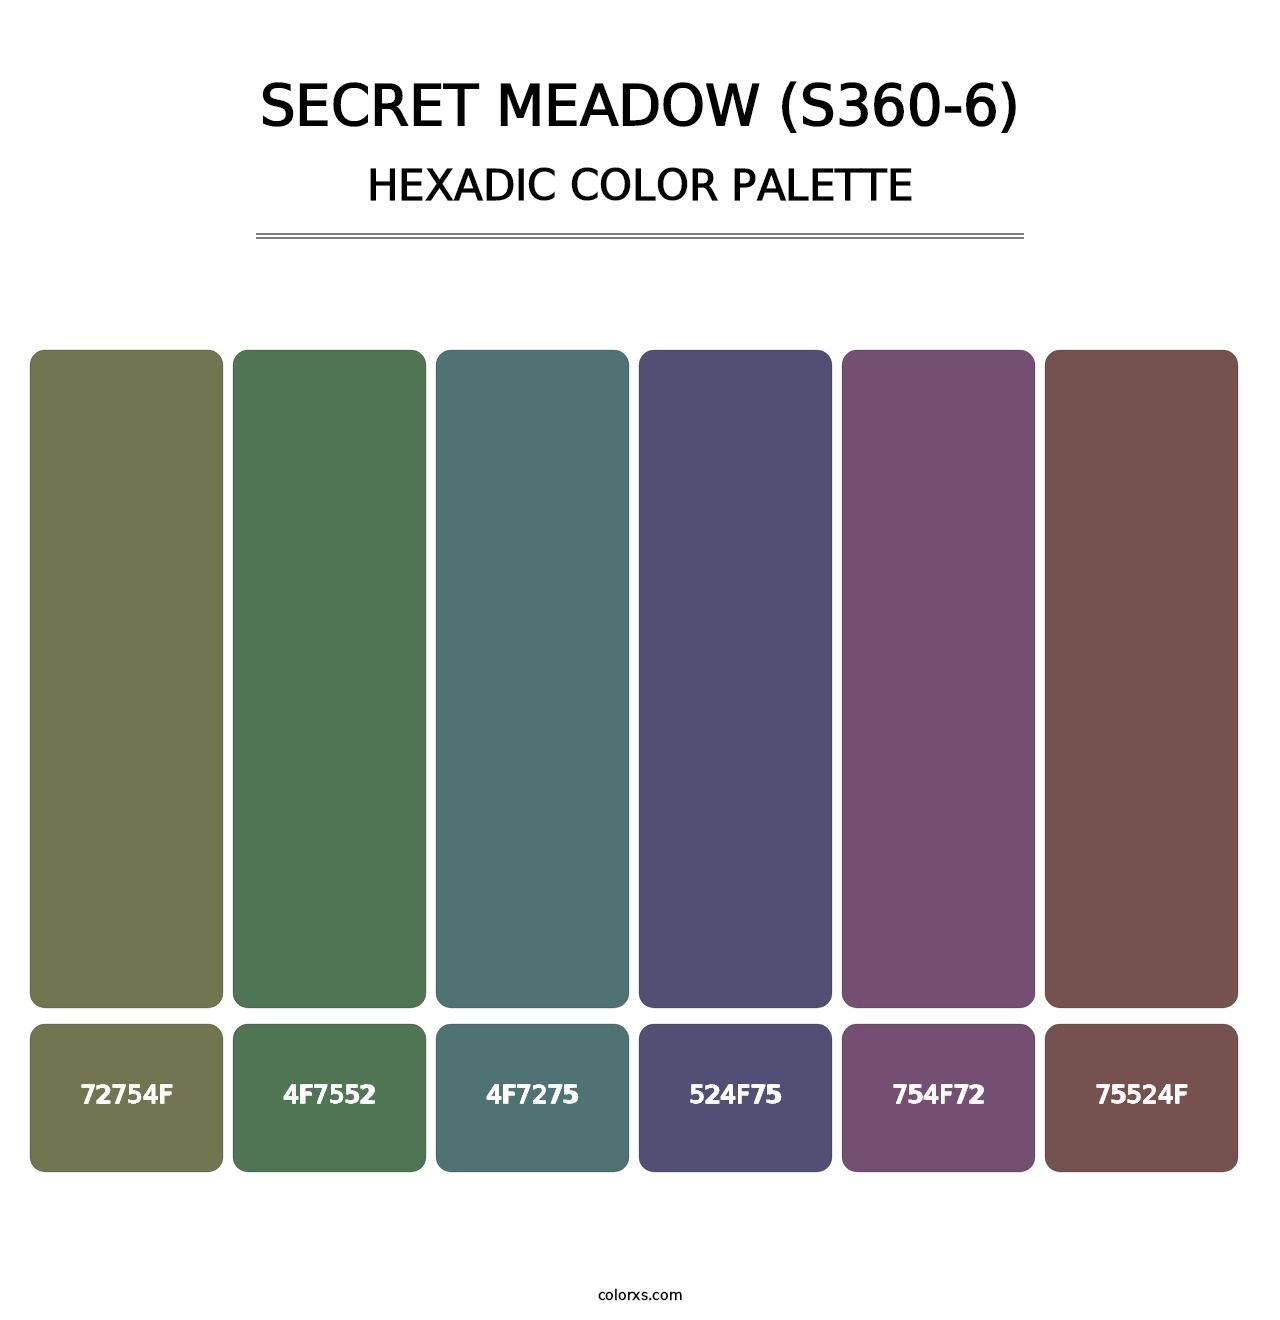 Secret Meadow (S360-6) - Hexadic Color Palette